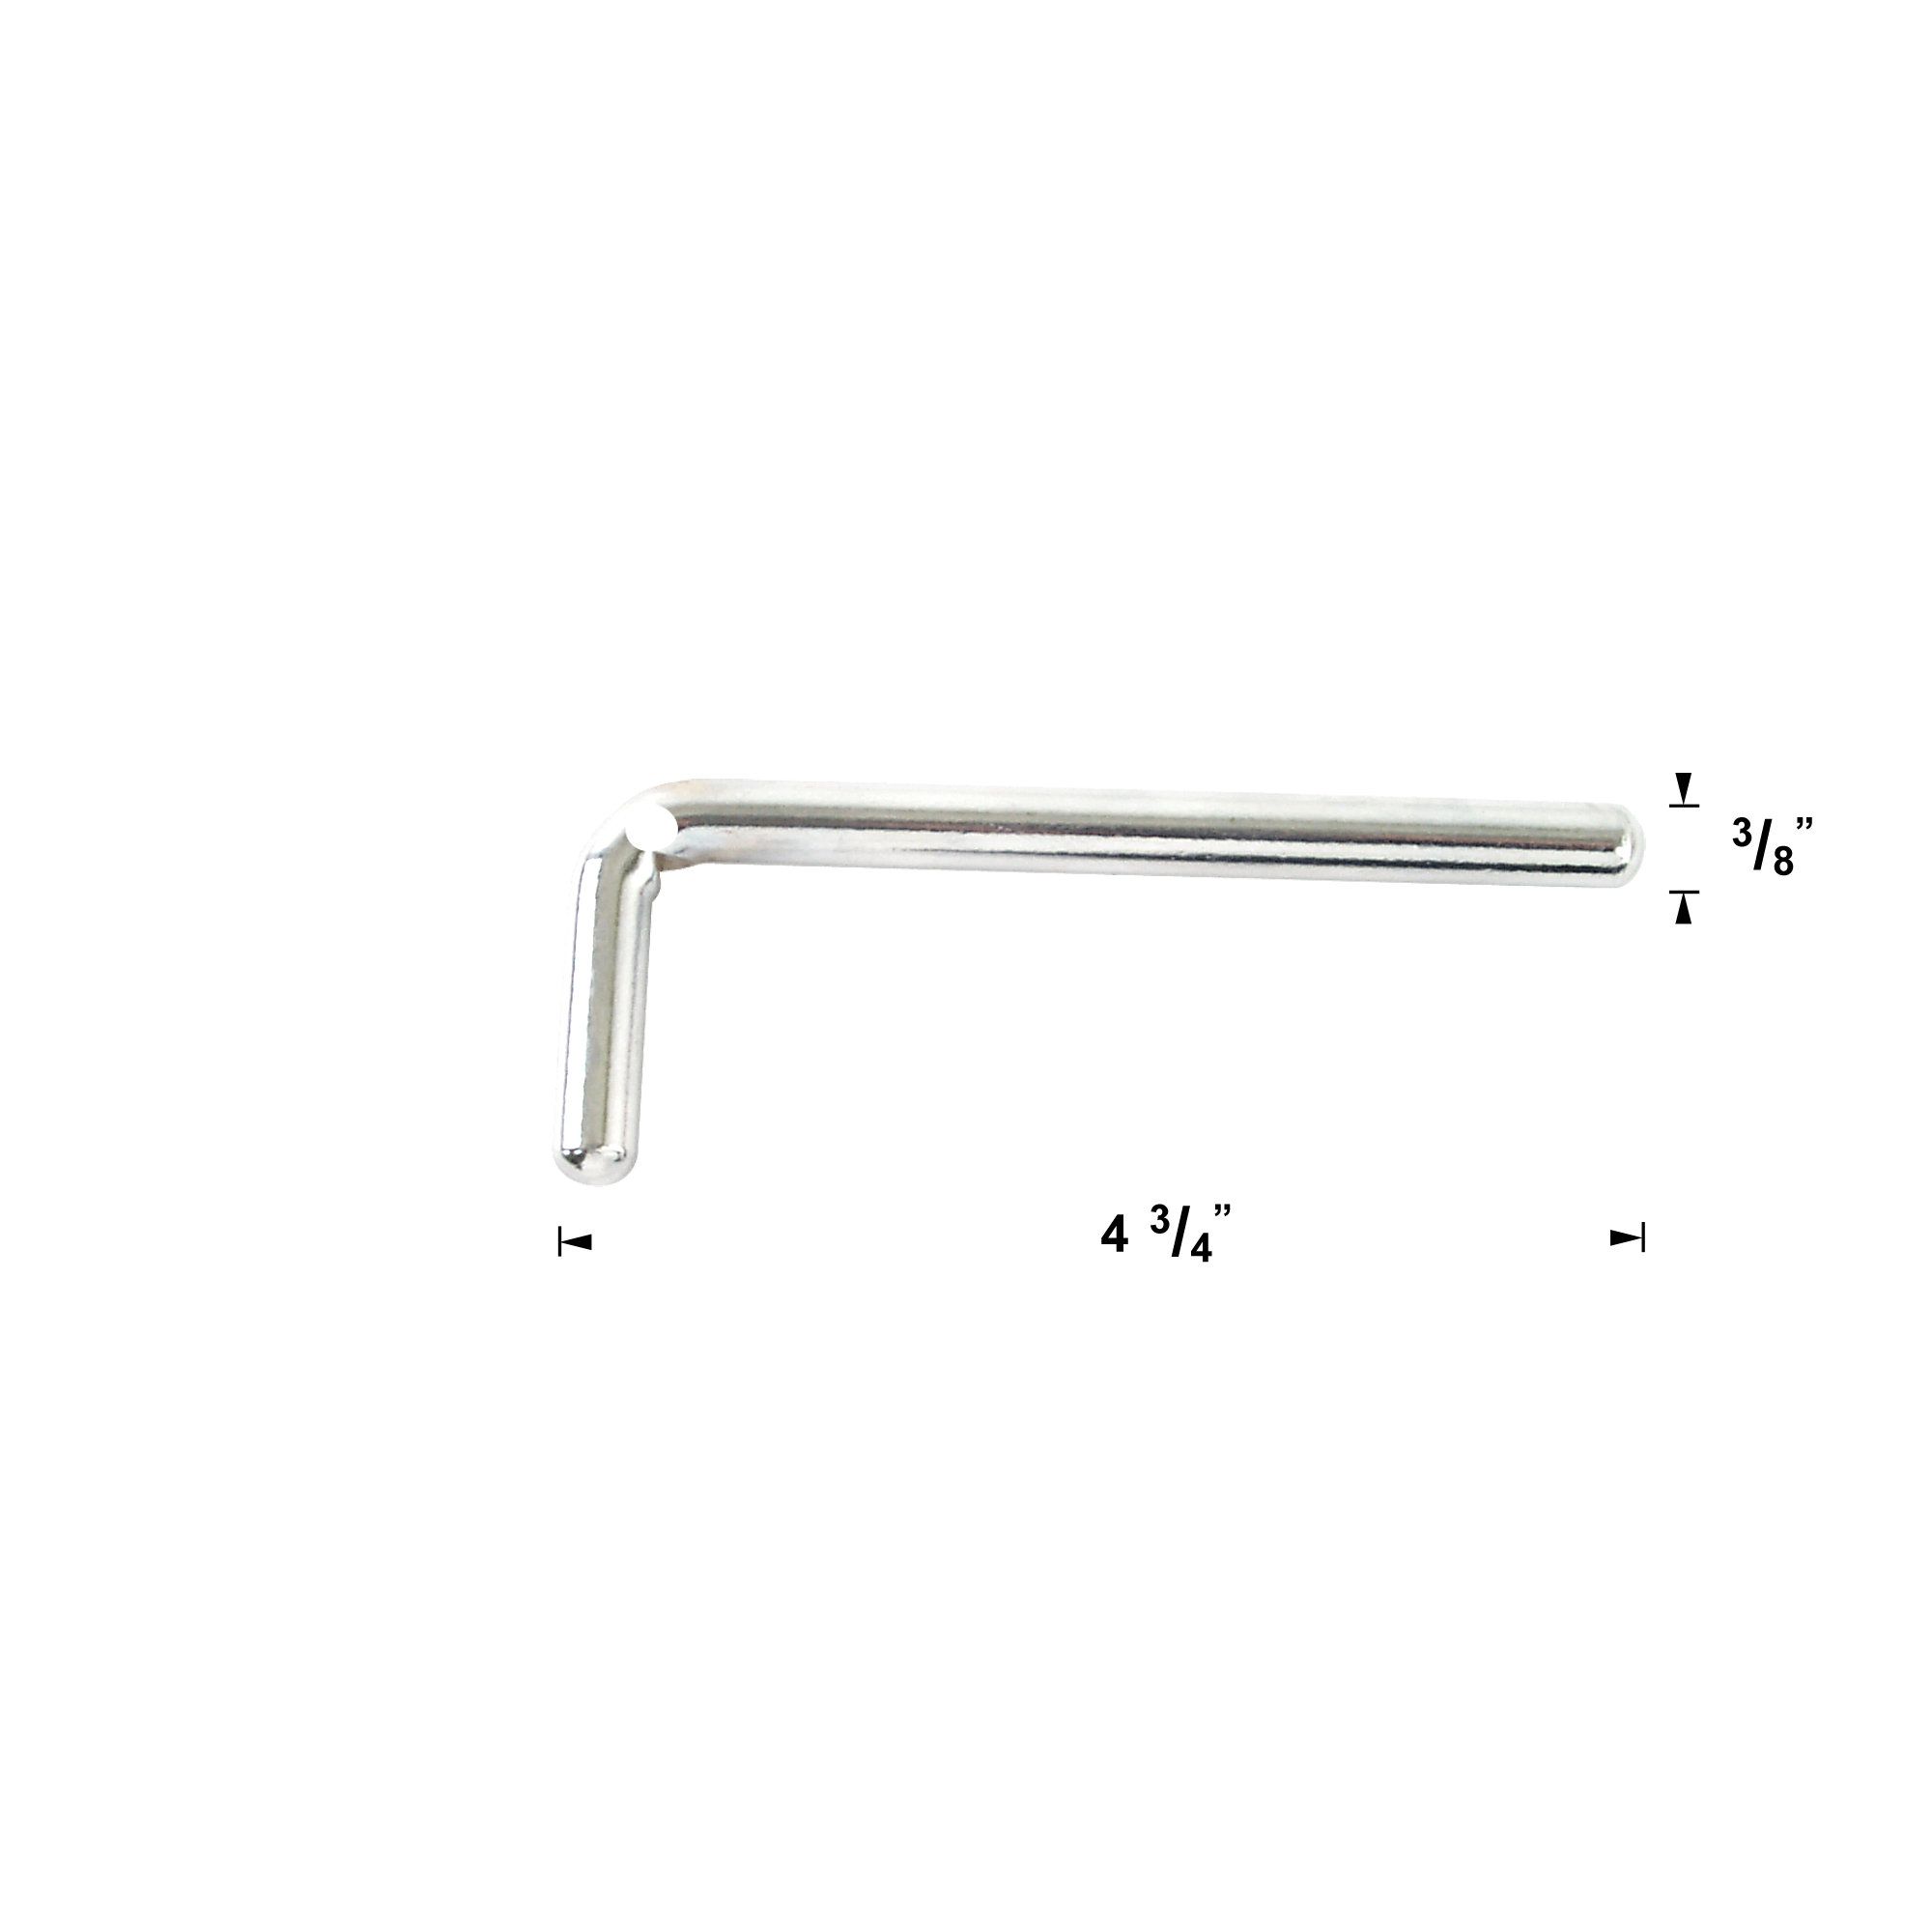 Selector Pin, 4.75" Overall Length, 3/8" Diameter